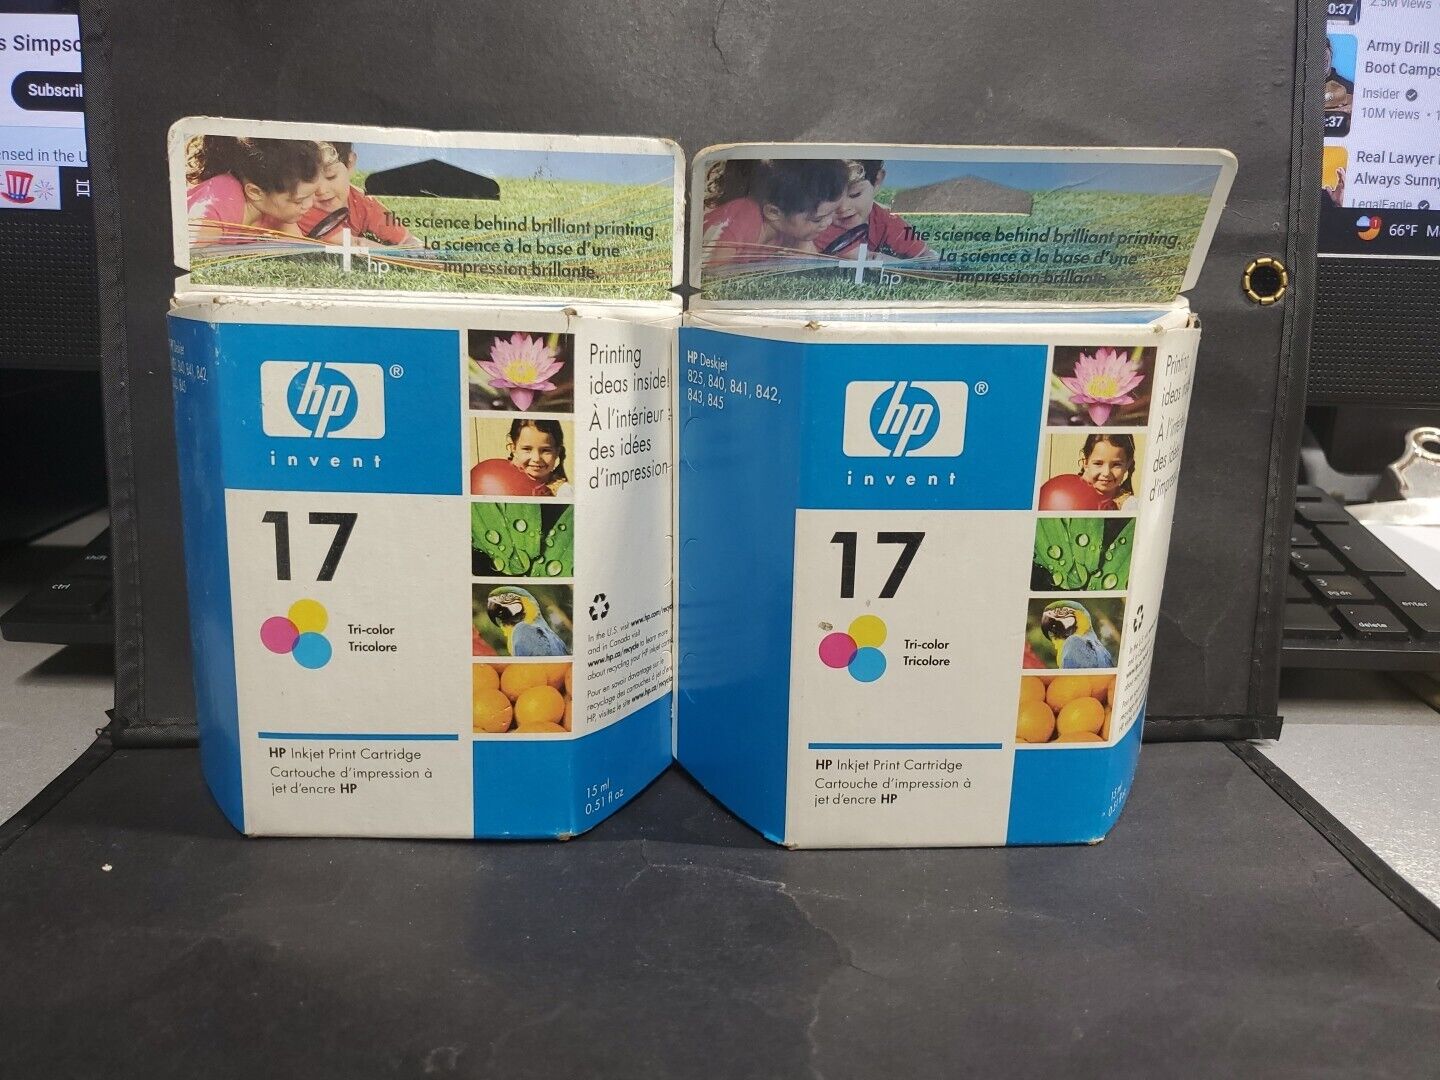 2 - HP Invent 17 inkjet print cartridge Tri-color NIB,  